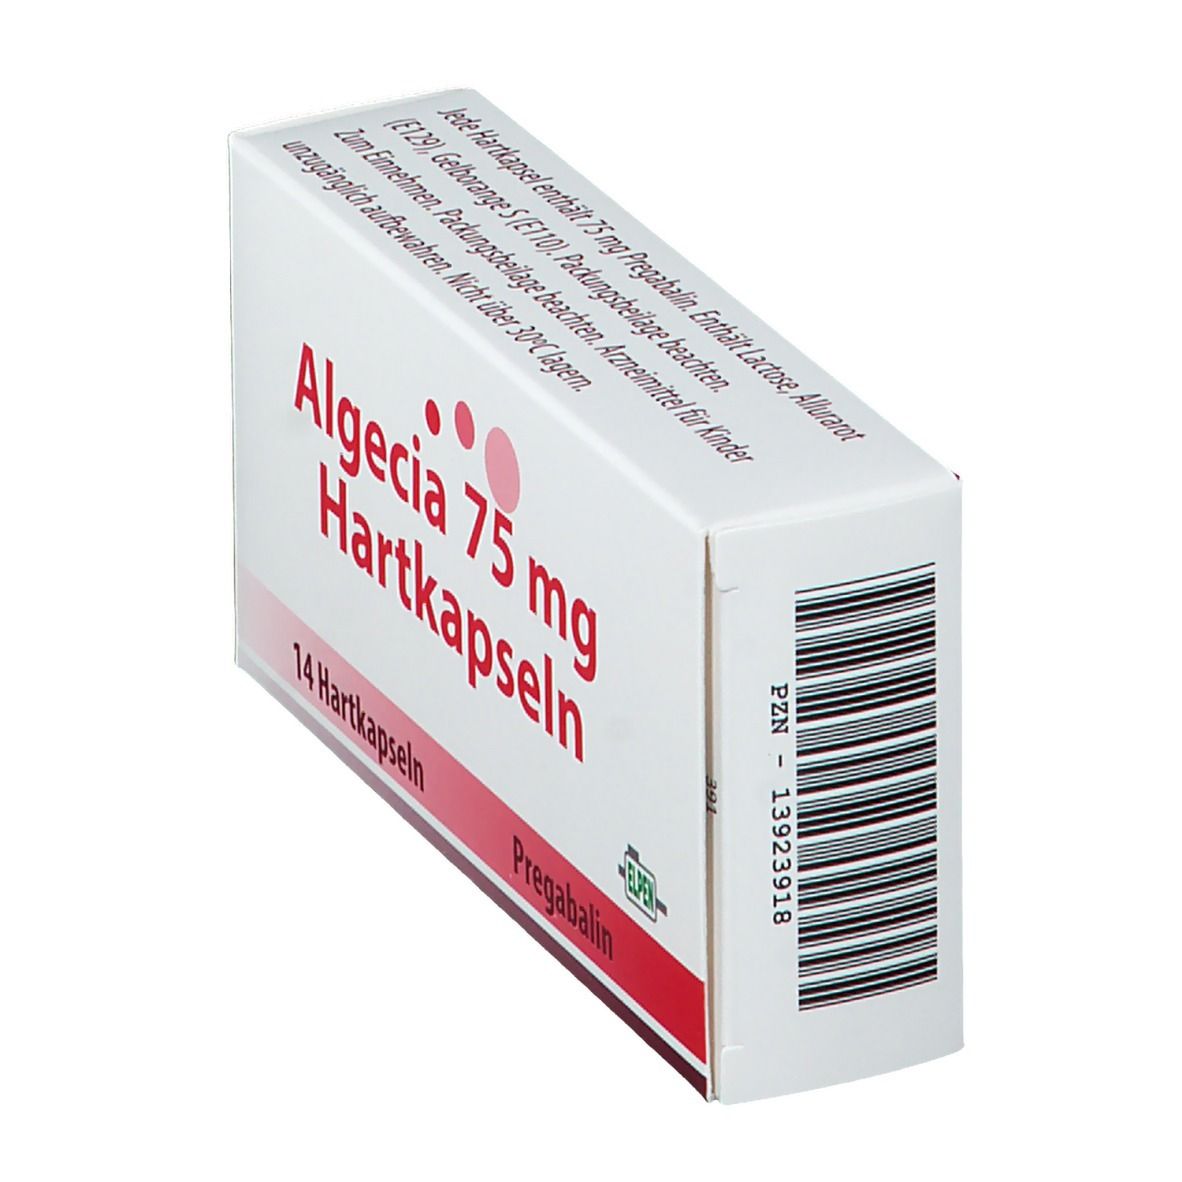 Algecia 75 mg